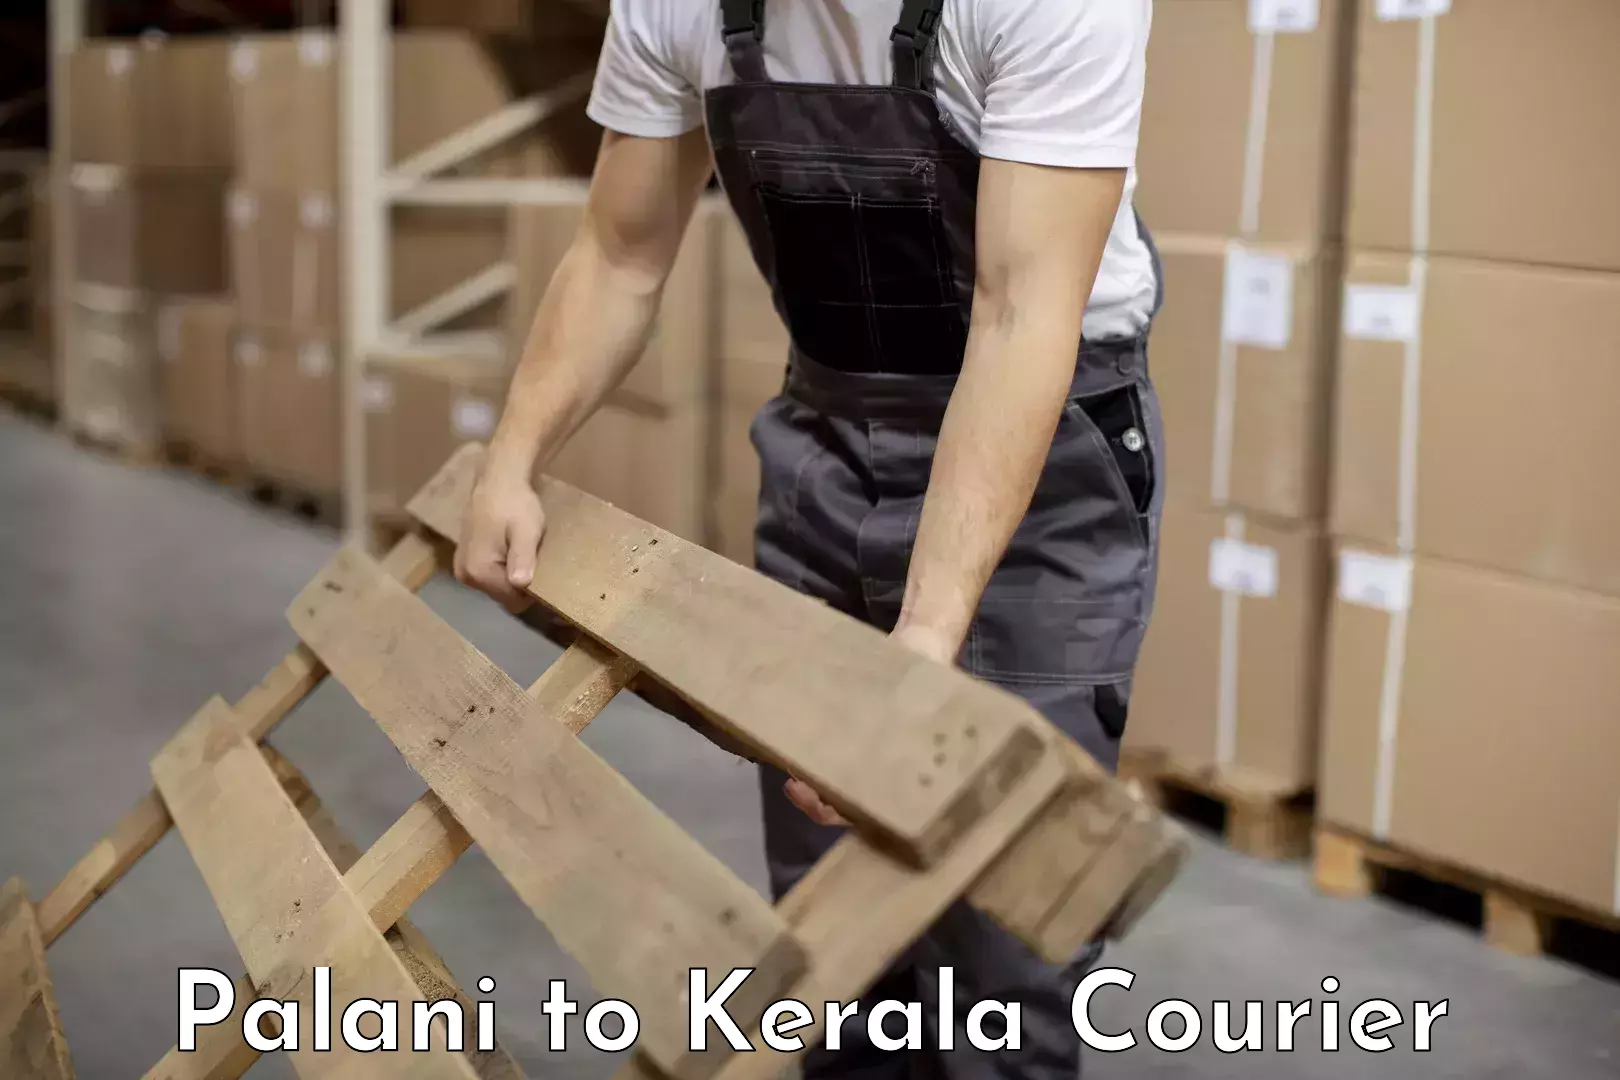 Professional moving company Palani to Kerala